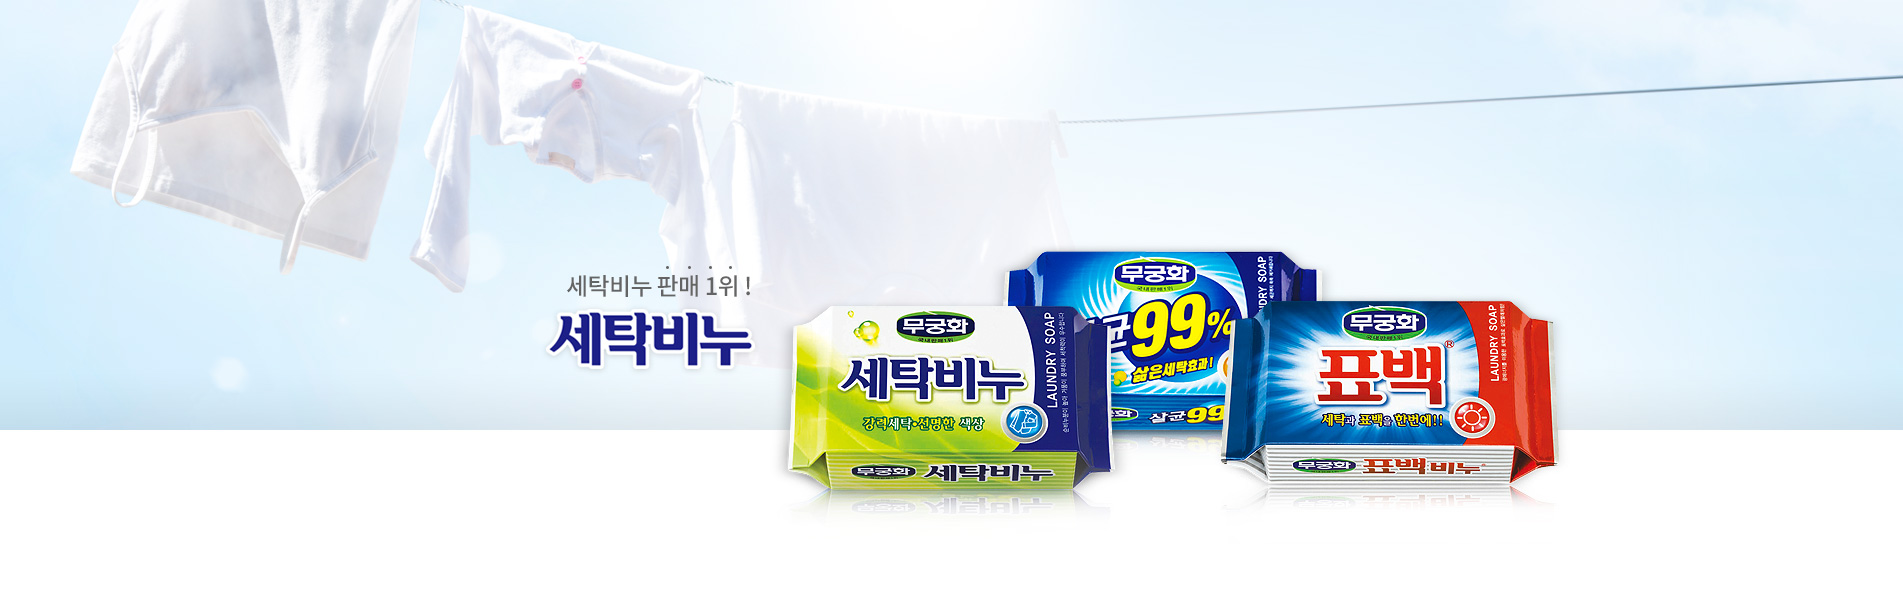 brand laundry soap 03 주식회사 무궁화